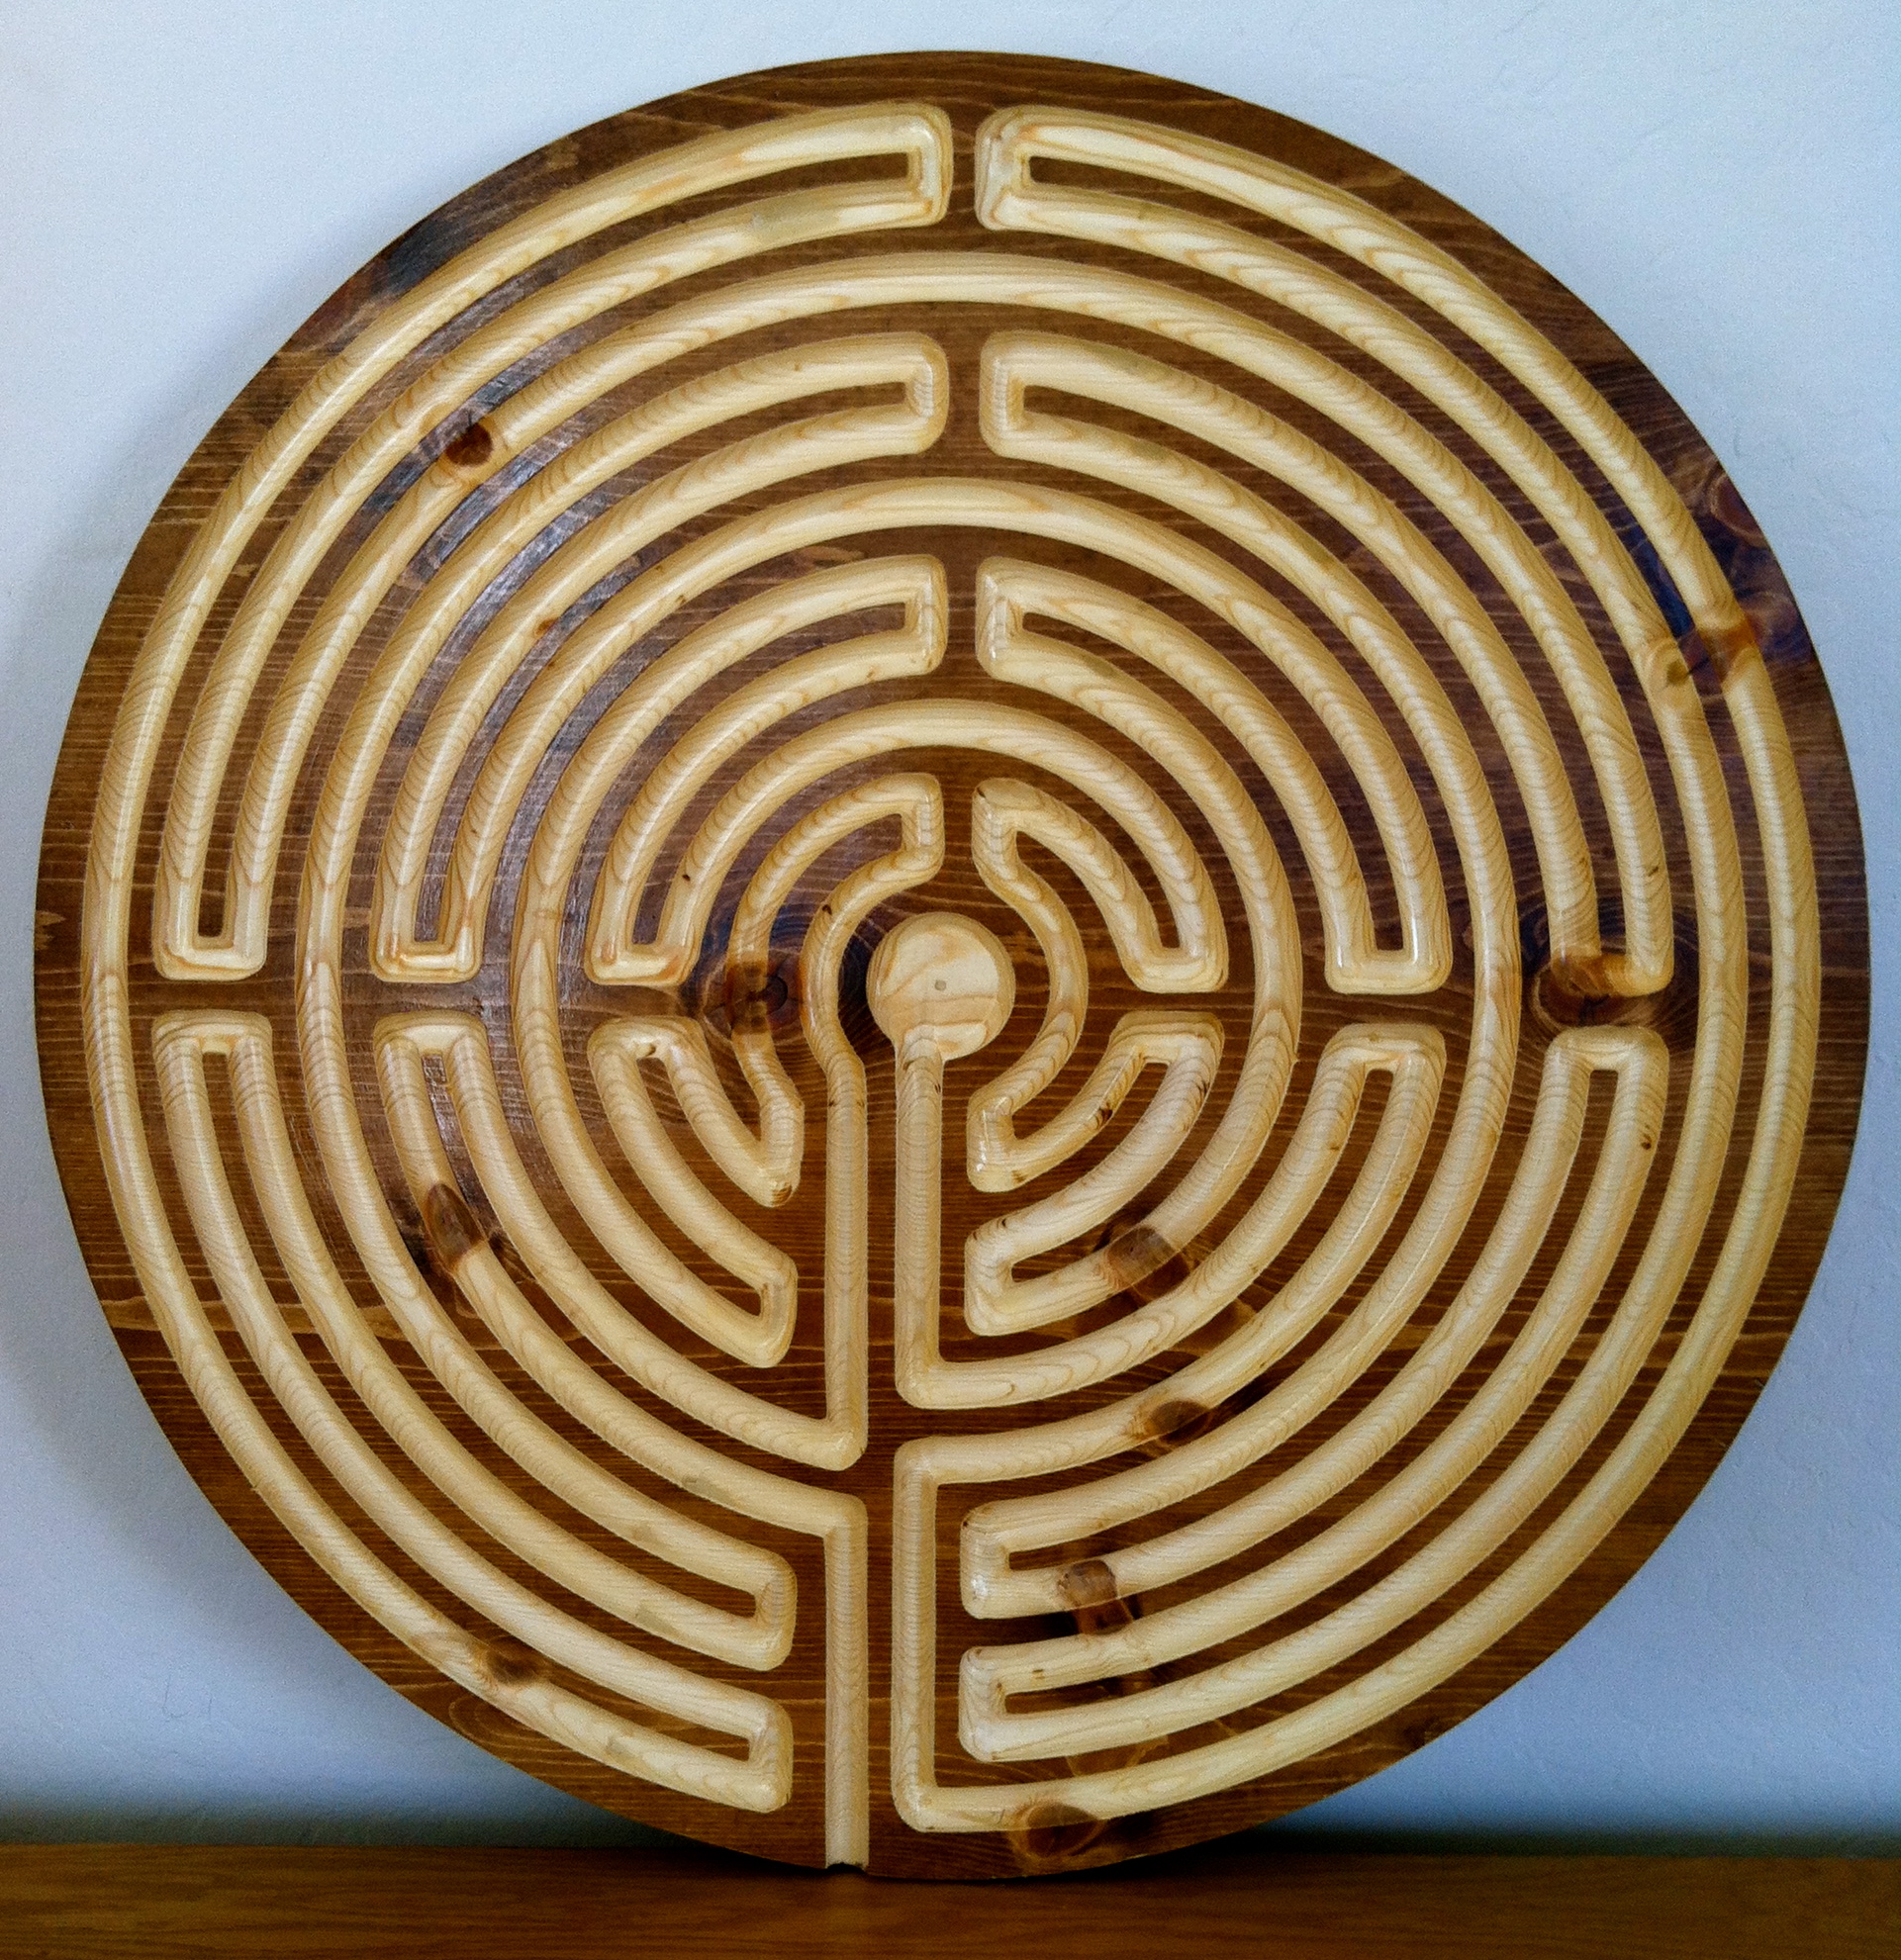 labyrinth2